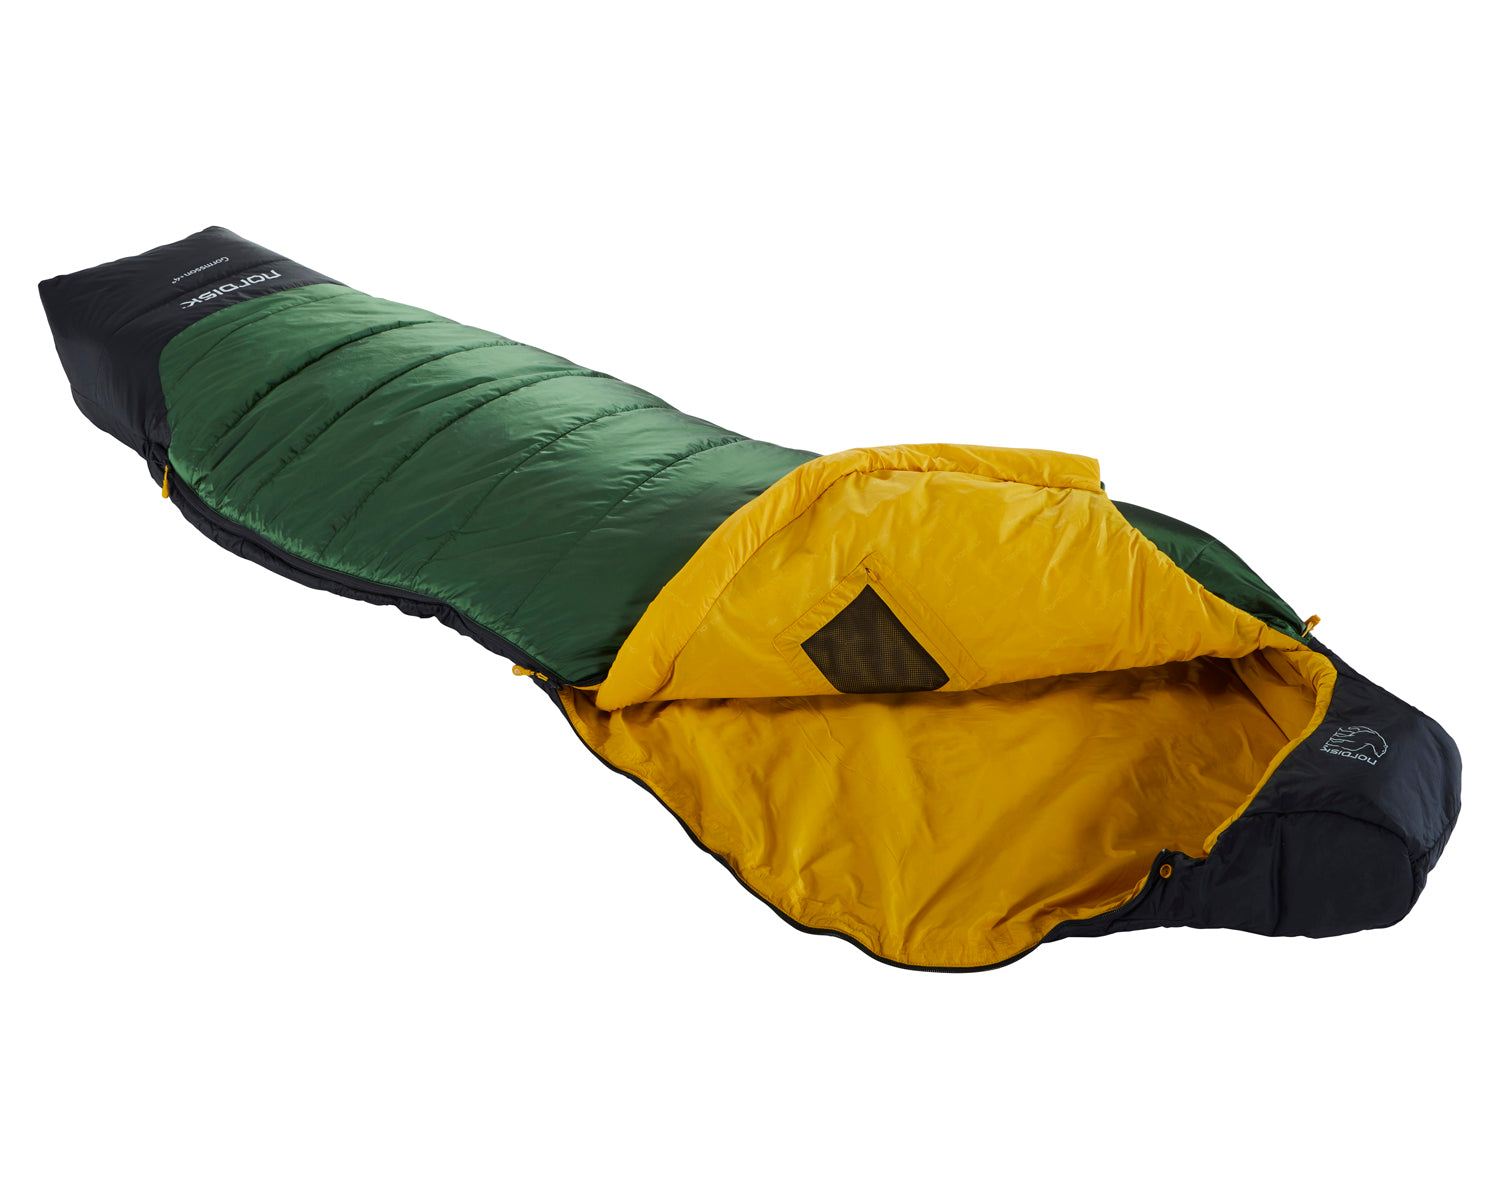 Gormsson +4° Curve sleeping bag - Artichoke Green/Mustard Yellow/Black